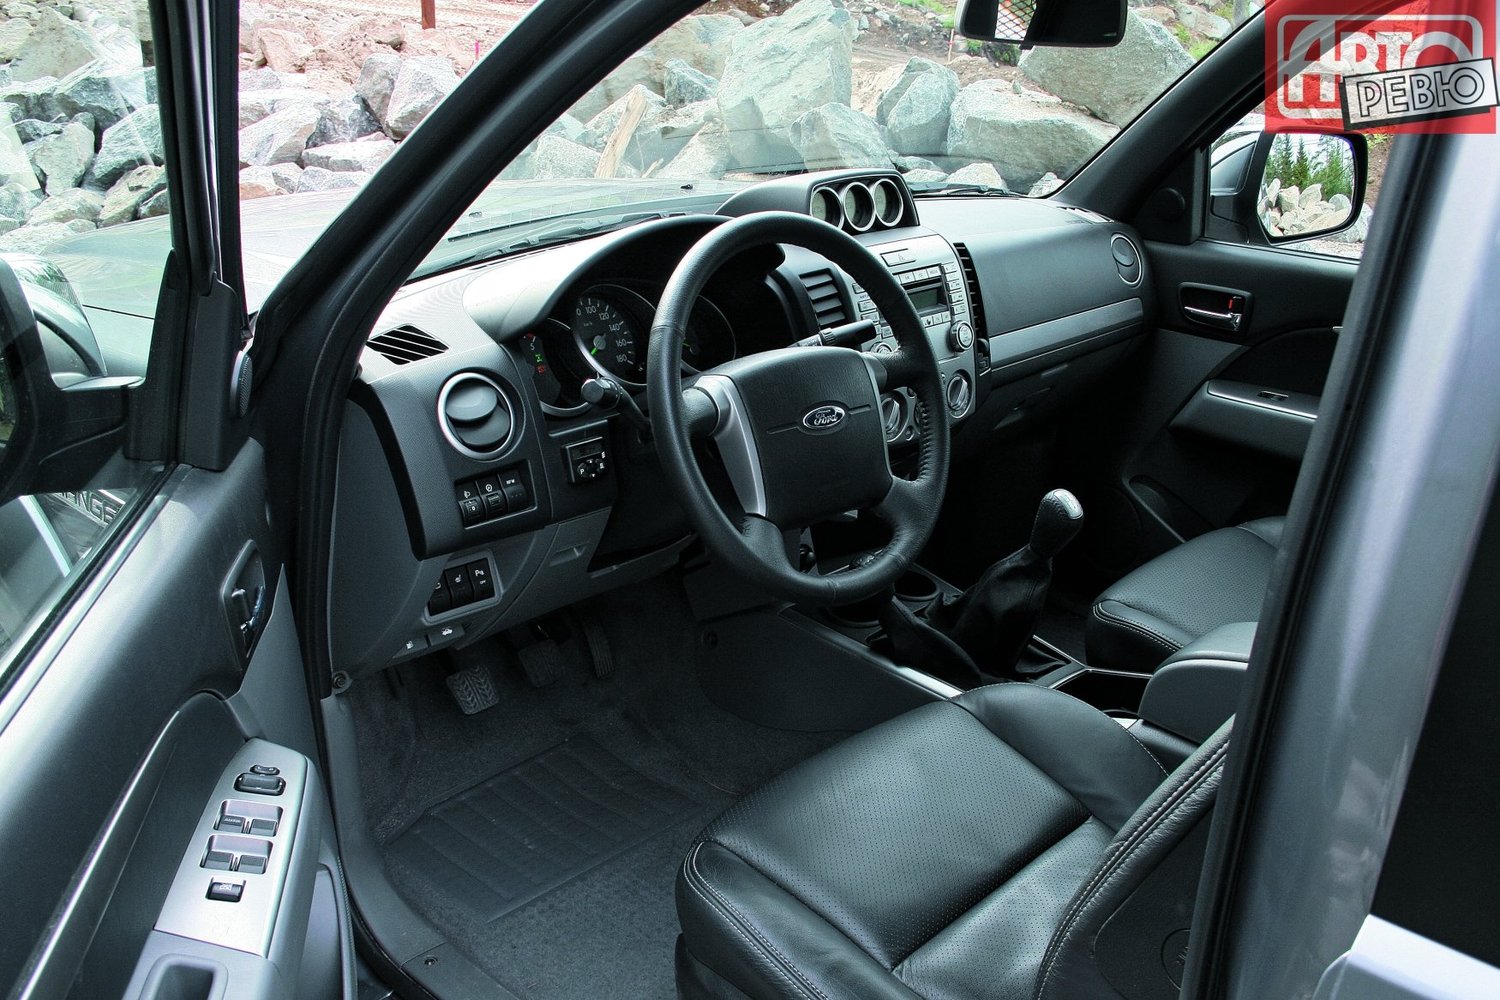 пикап 4 дв. Ford Ranger 2006 - 2010г выпуска модификация 2.3 AT (143 л.с.)